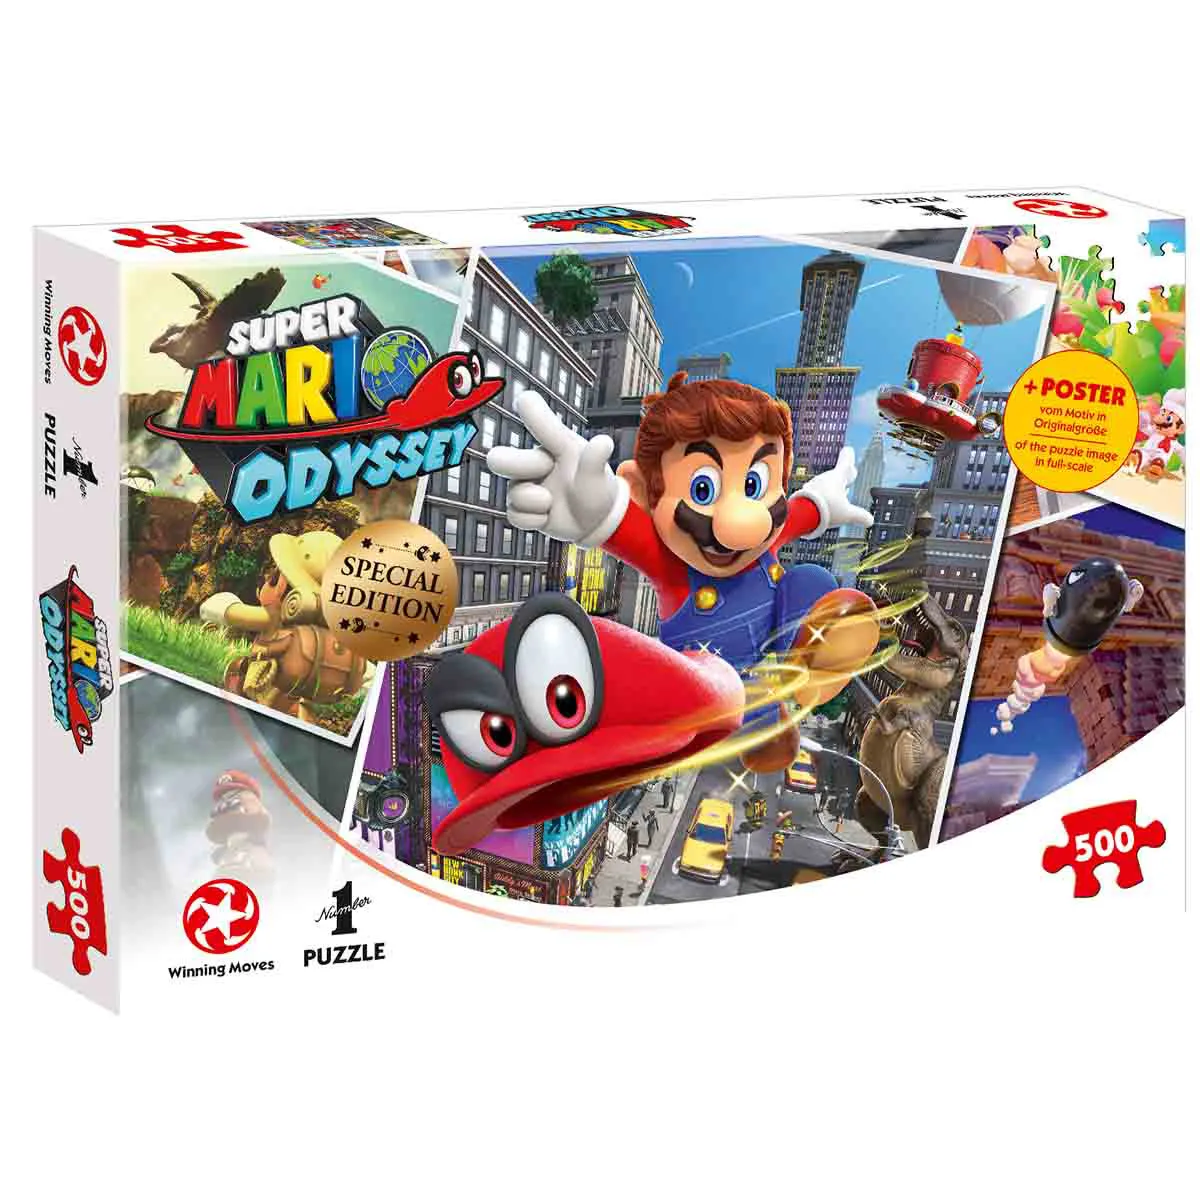 Puzzle - Super Mario Odyssey